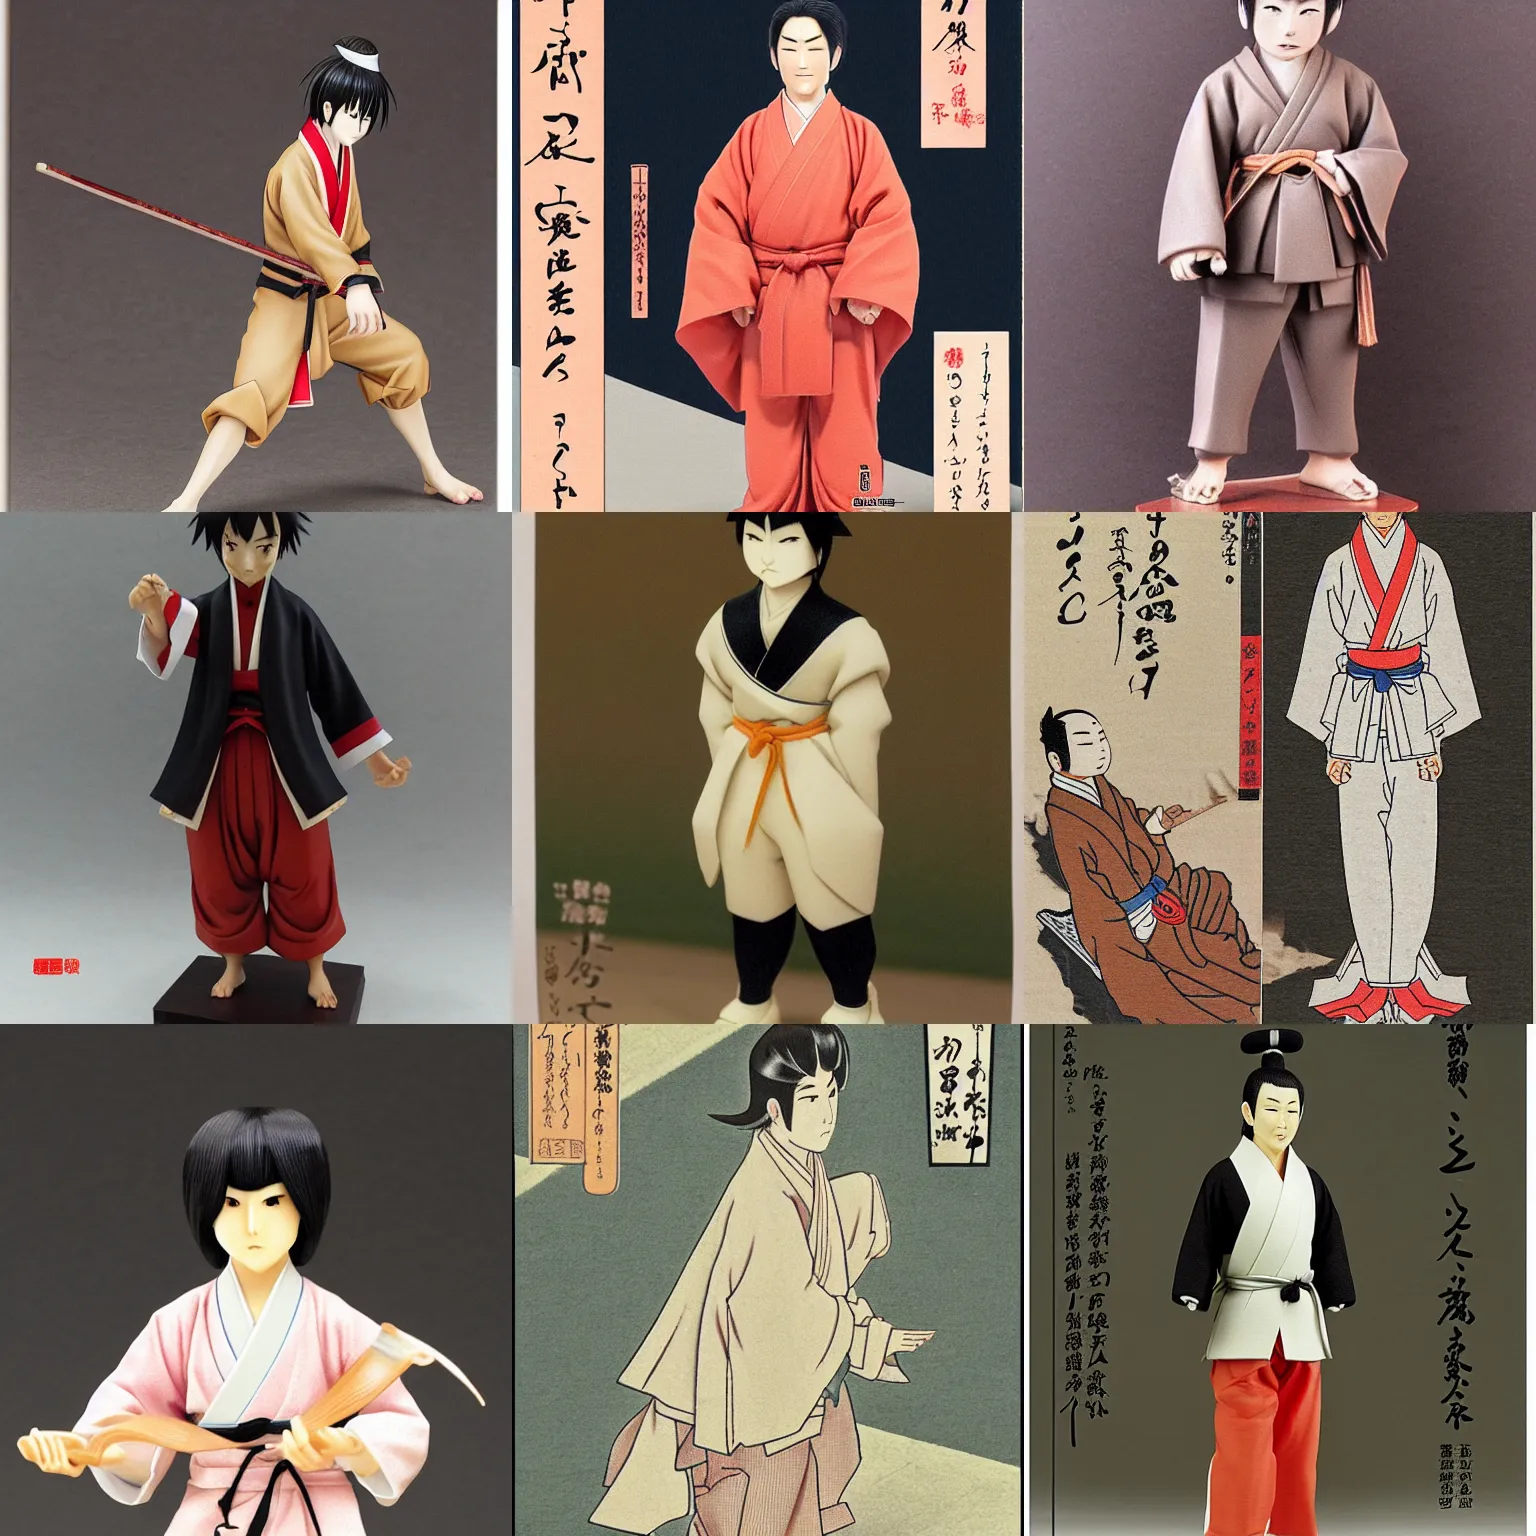 Prompt: minamoto kun monogatari by riichi ueshiba, highly detailed clothing